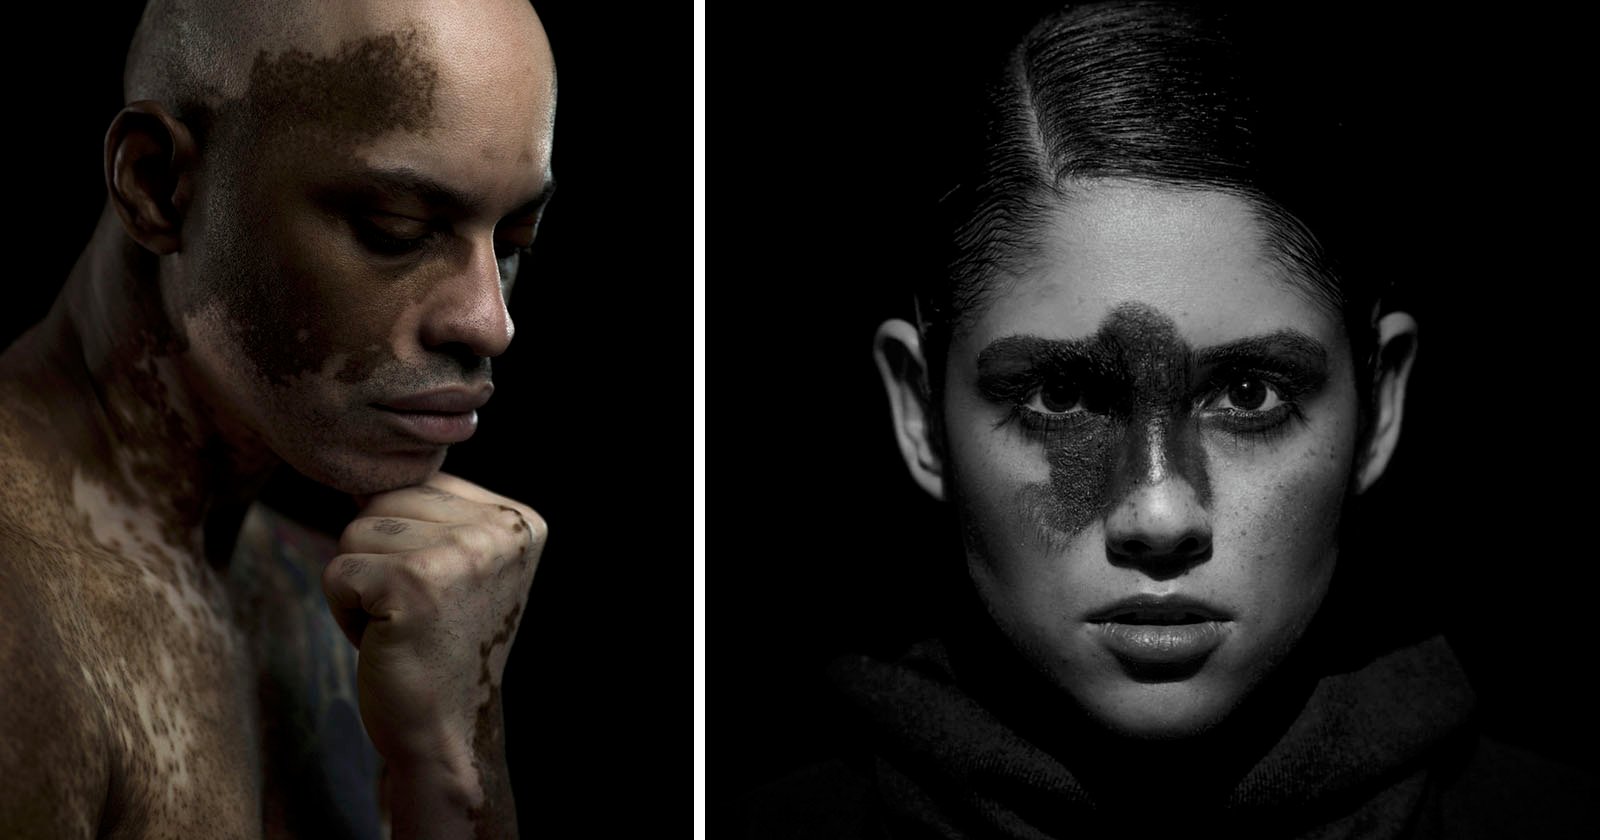  unusual beauty photo series celebrates rare skin conditions 